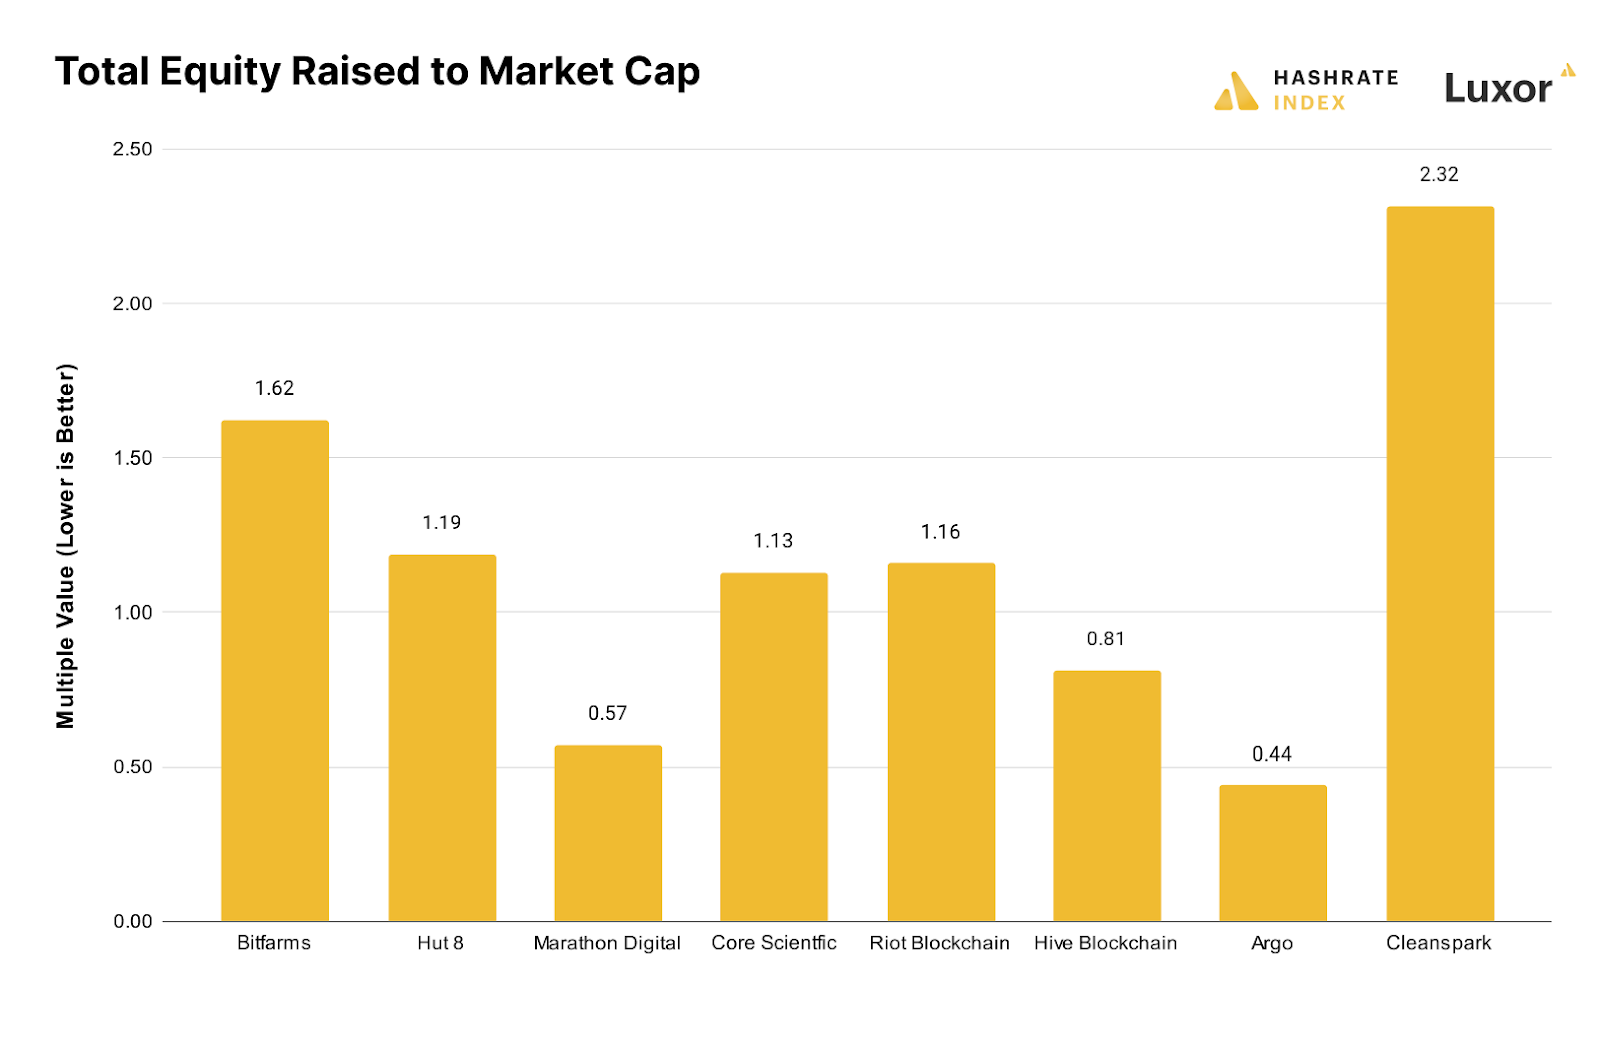 Bitcoin mining stocks equity raised vs marketcap | Source: 10-Qs, public disclosures